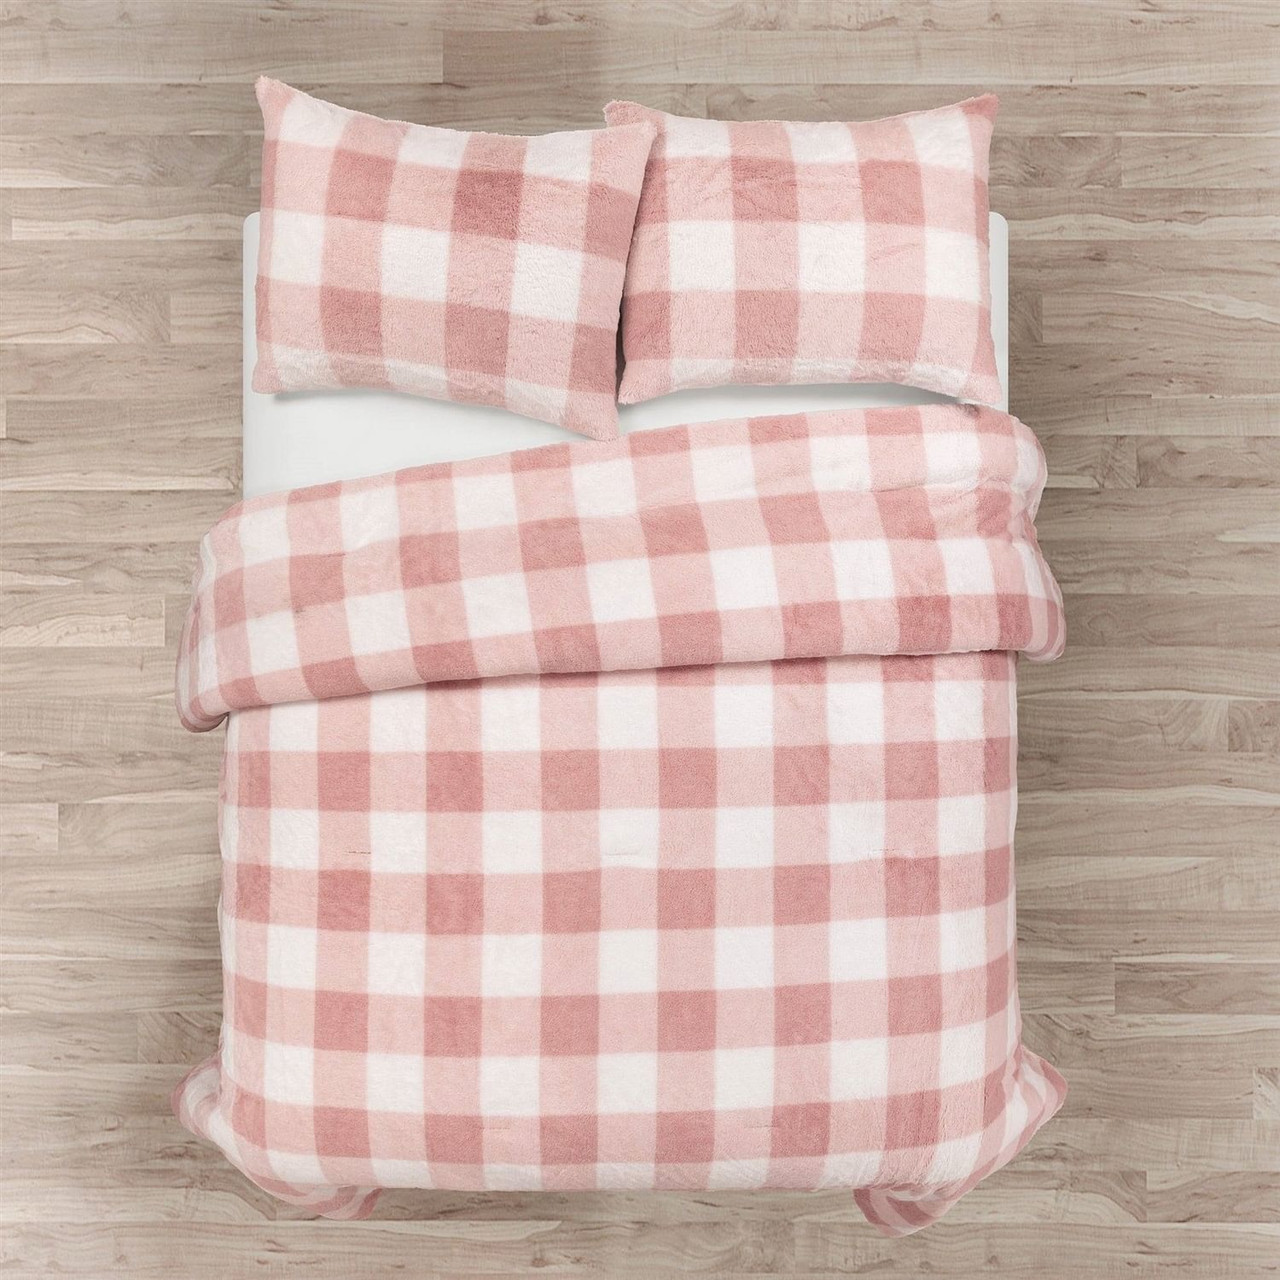 Full/Queen Size Plaid Soft Faux Fur Comforter Set Pink Blush